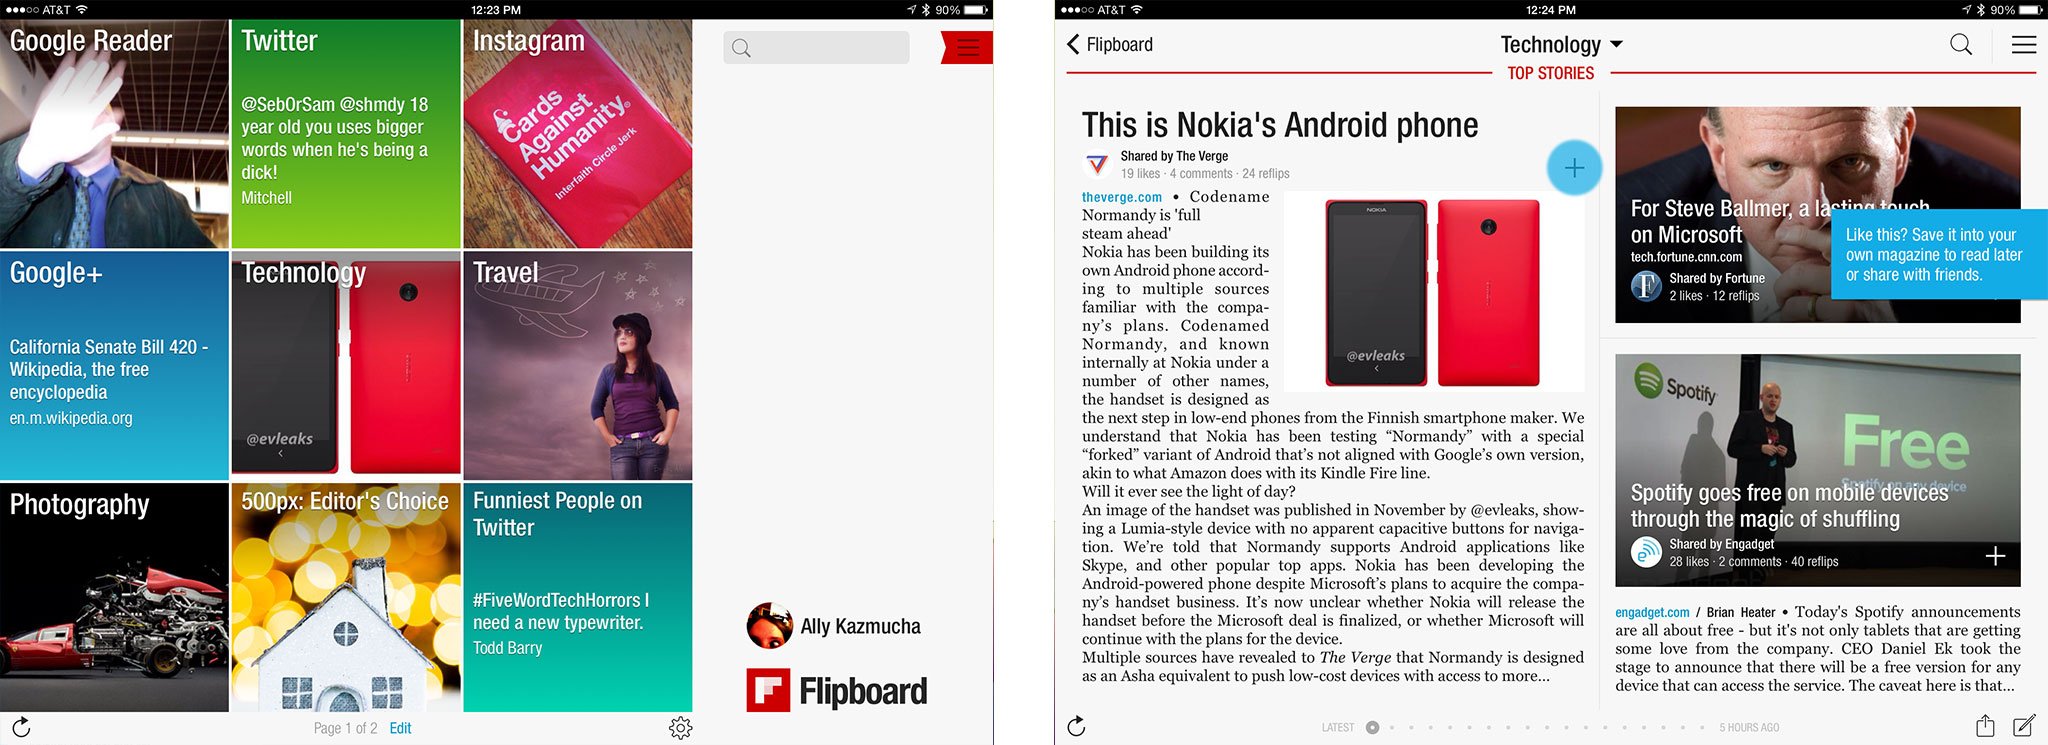 Best news apps for iPad: Flipboard